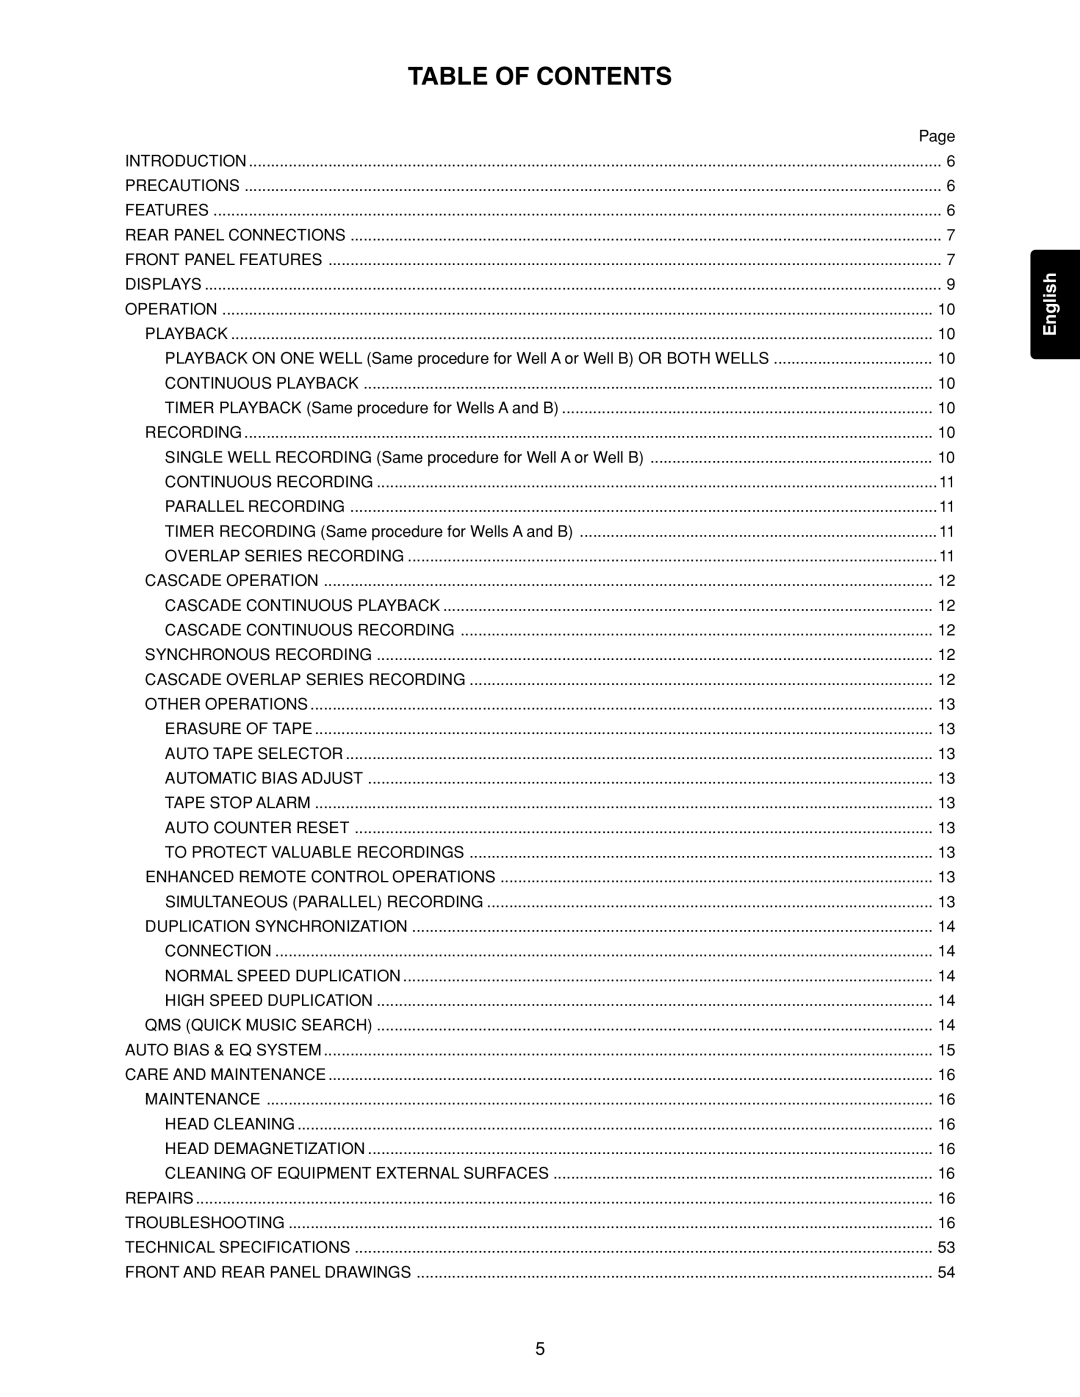 Marantz PMD520 manual Table of Contents 